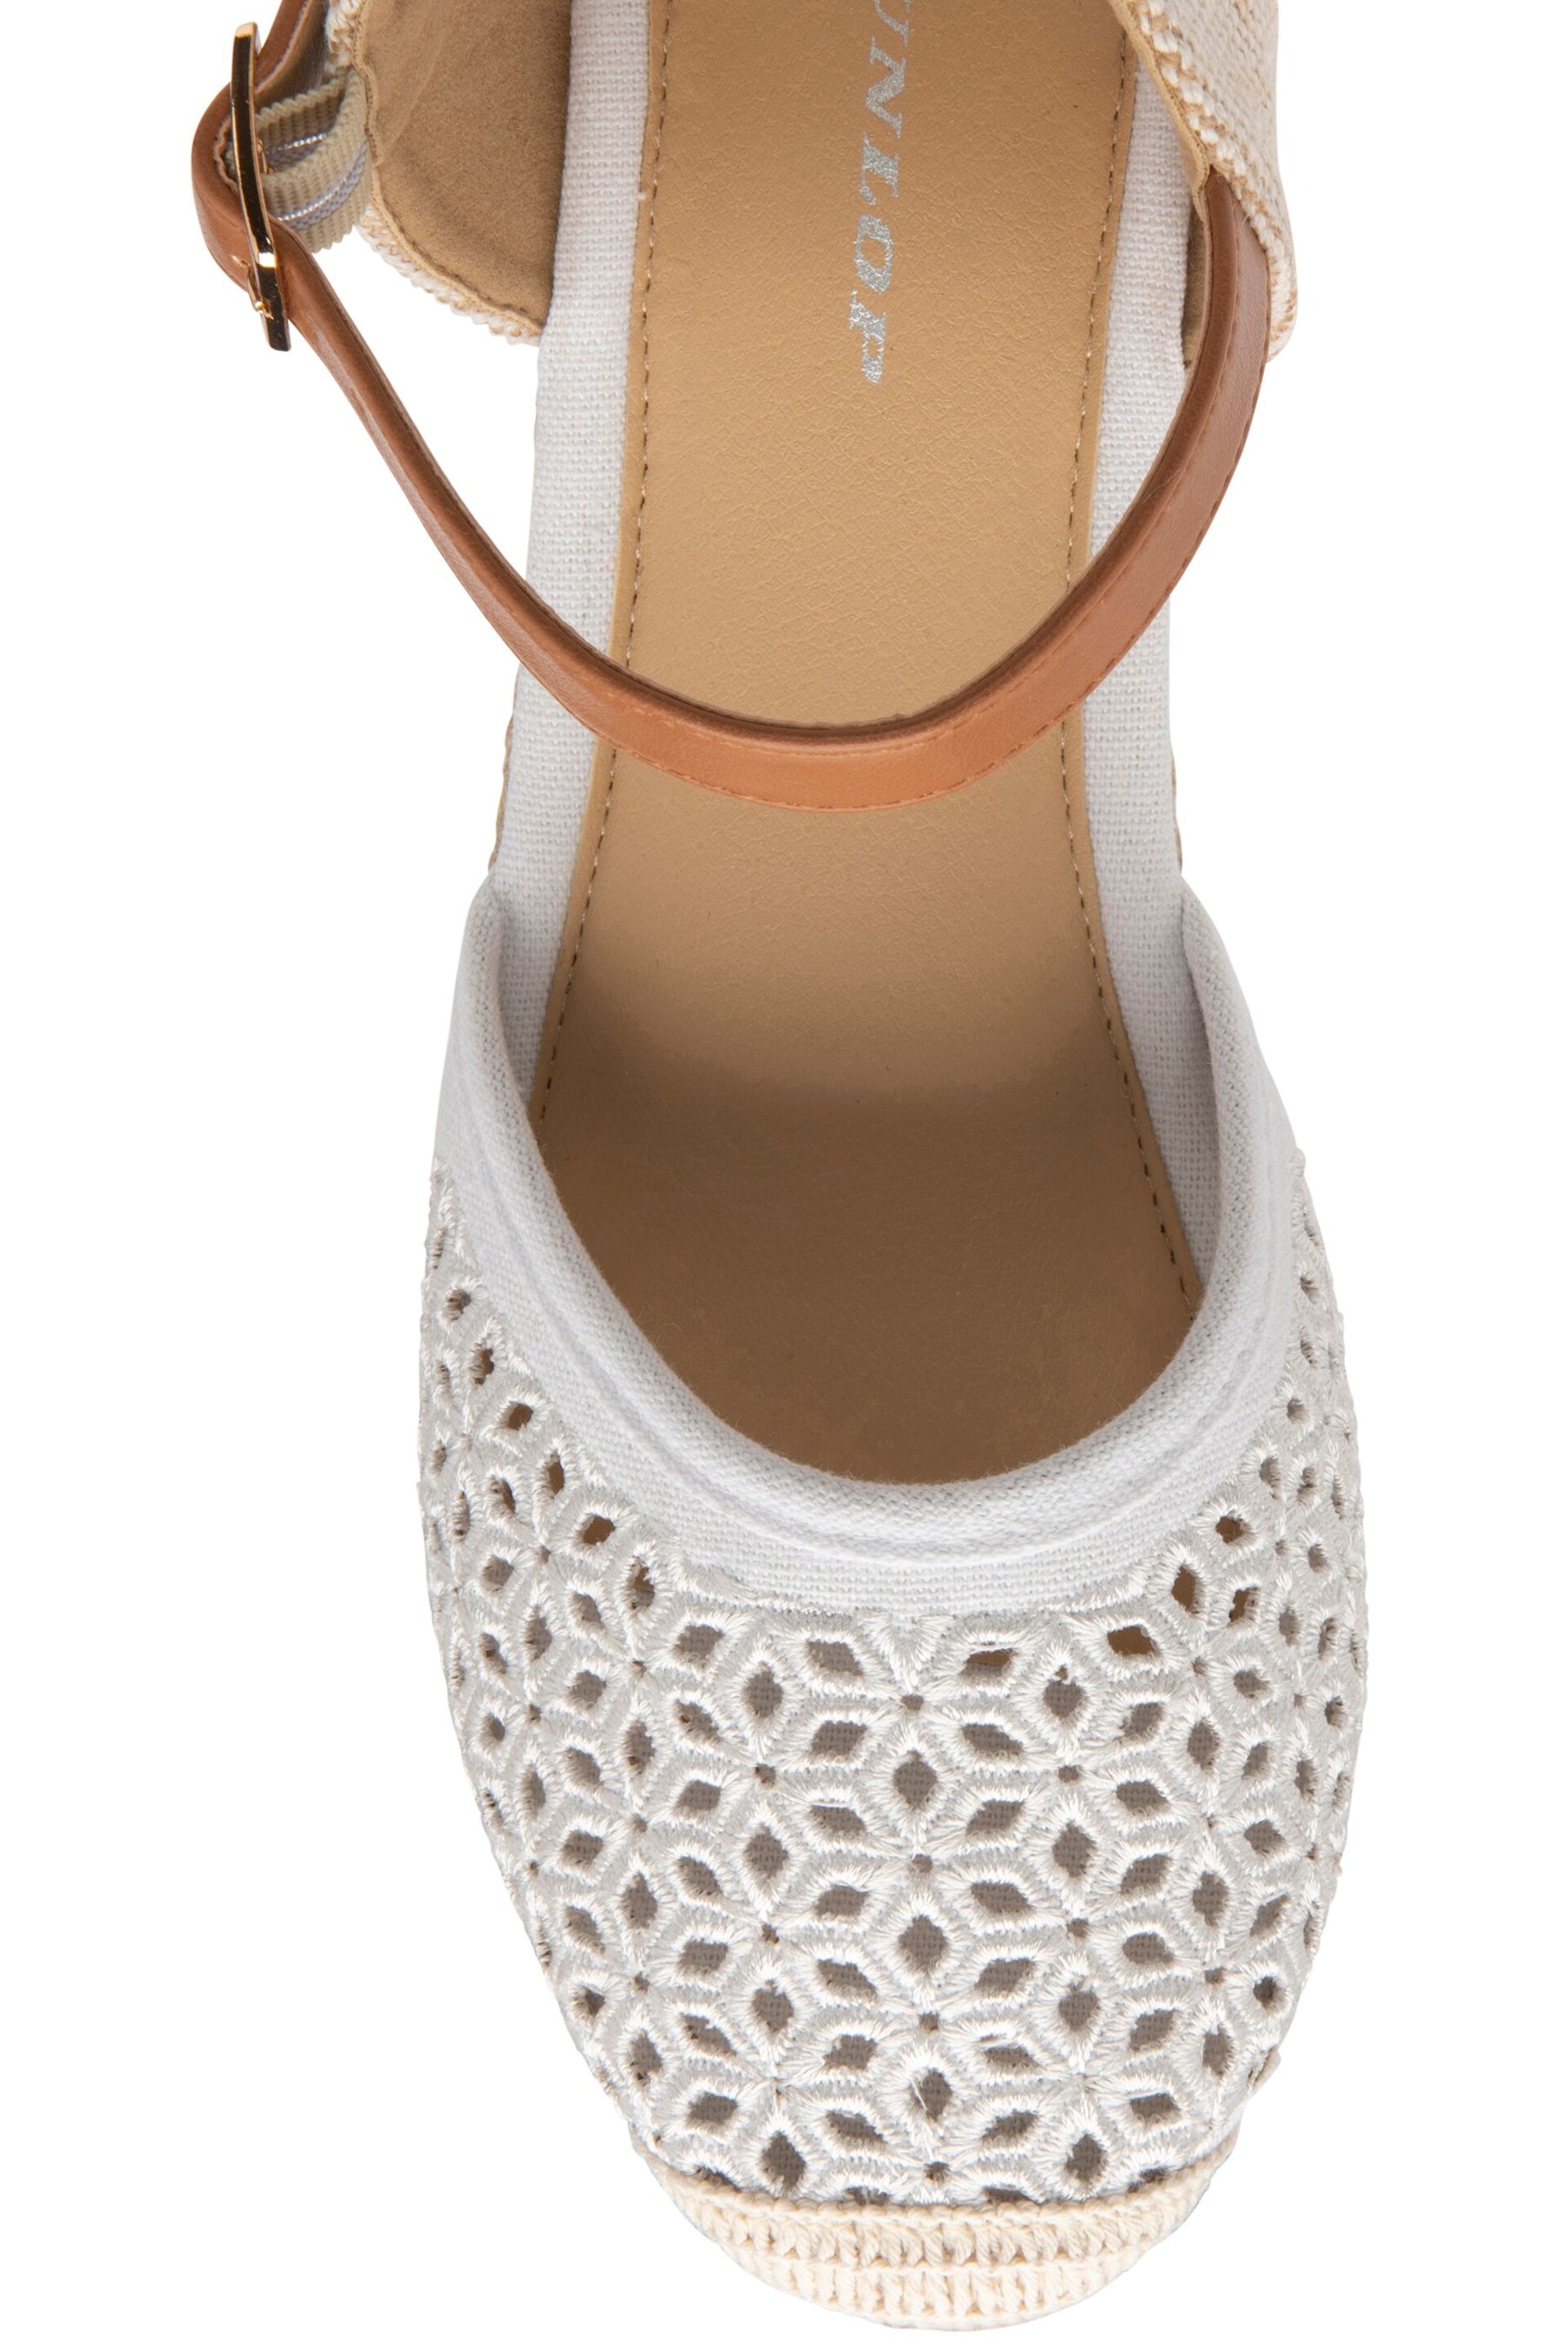 Dunlop White Wedges Espadrilles Sandals - Image 4 of 4